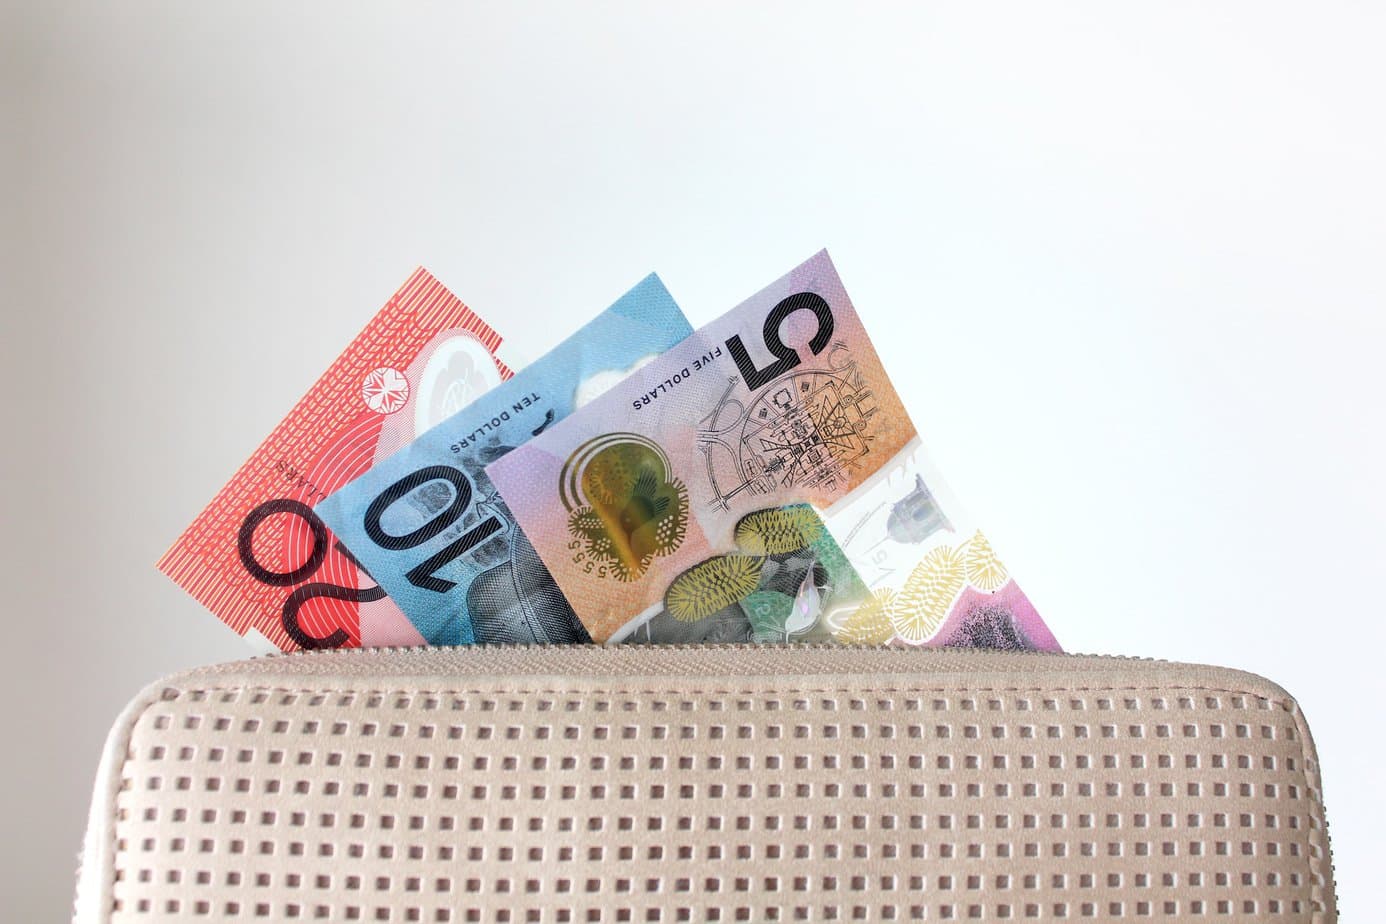 Australian dollar bills sticking out of a ladies purse or wallet, spending money, cash, AUD